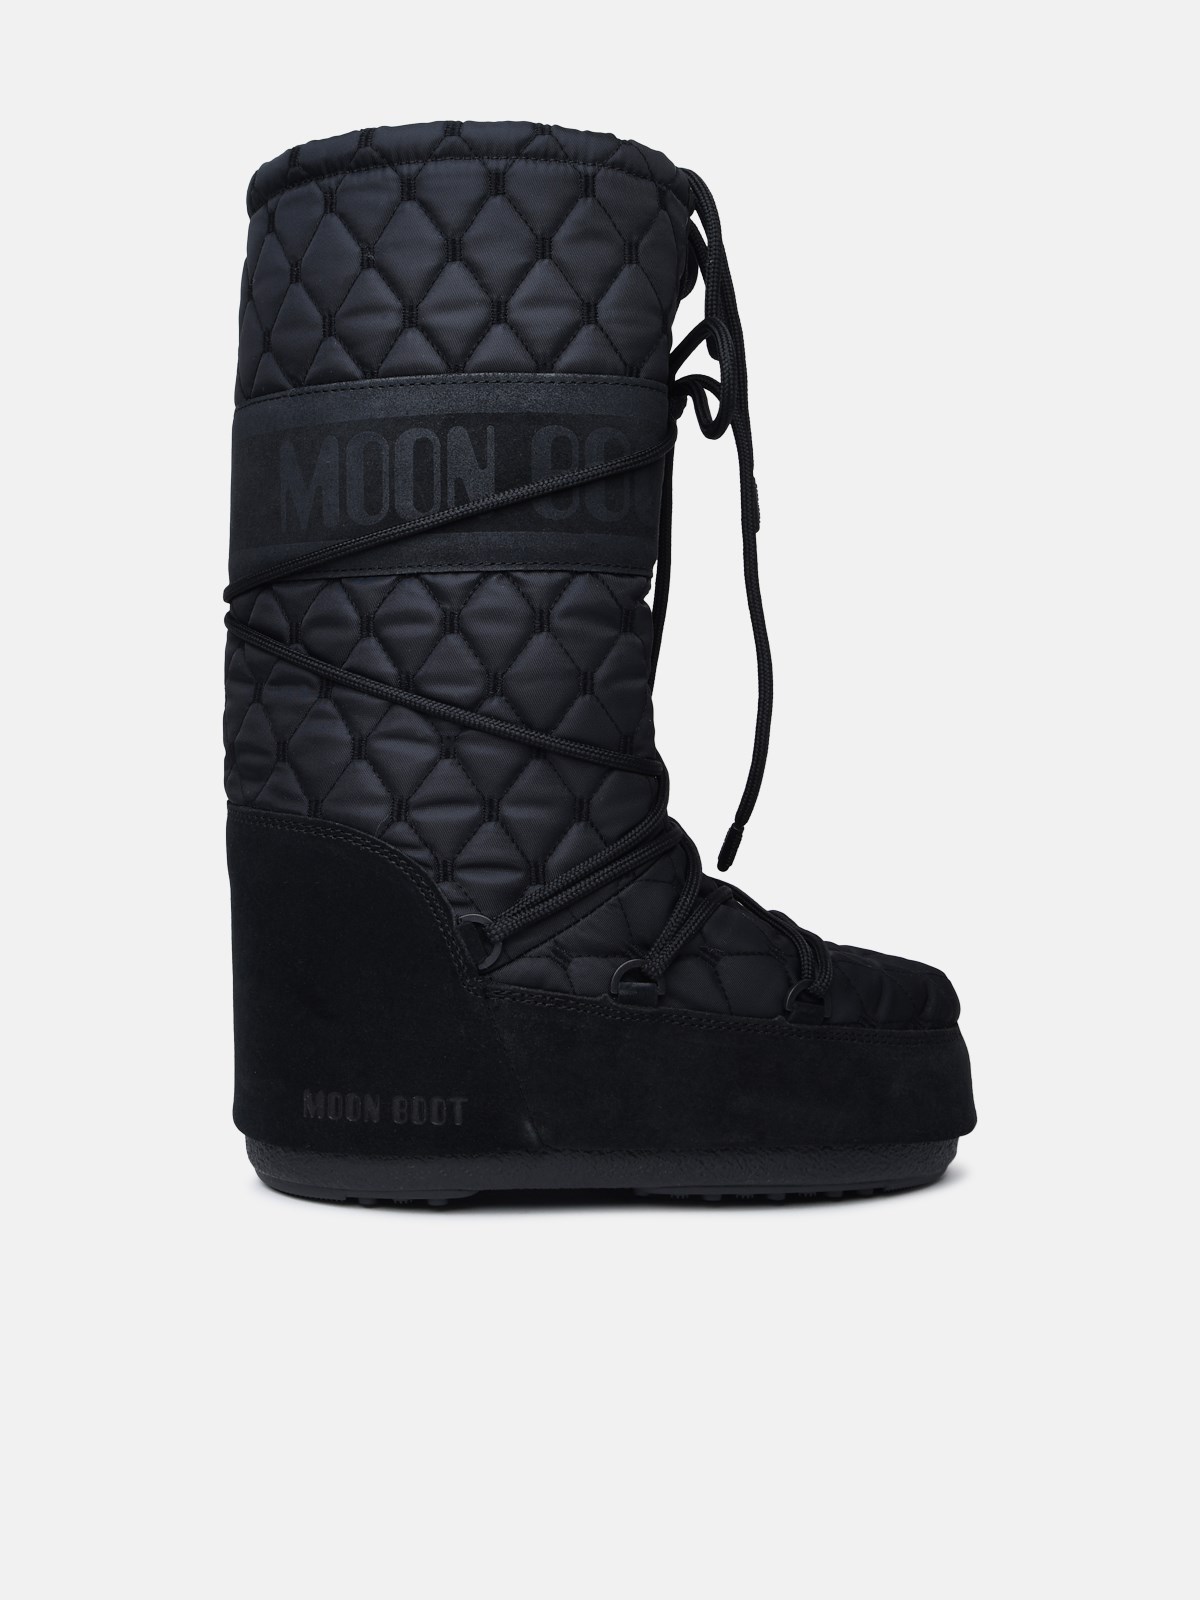 Moonboot Black Fabric Blend Boots